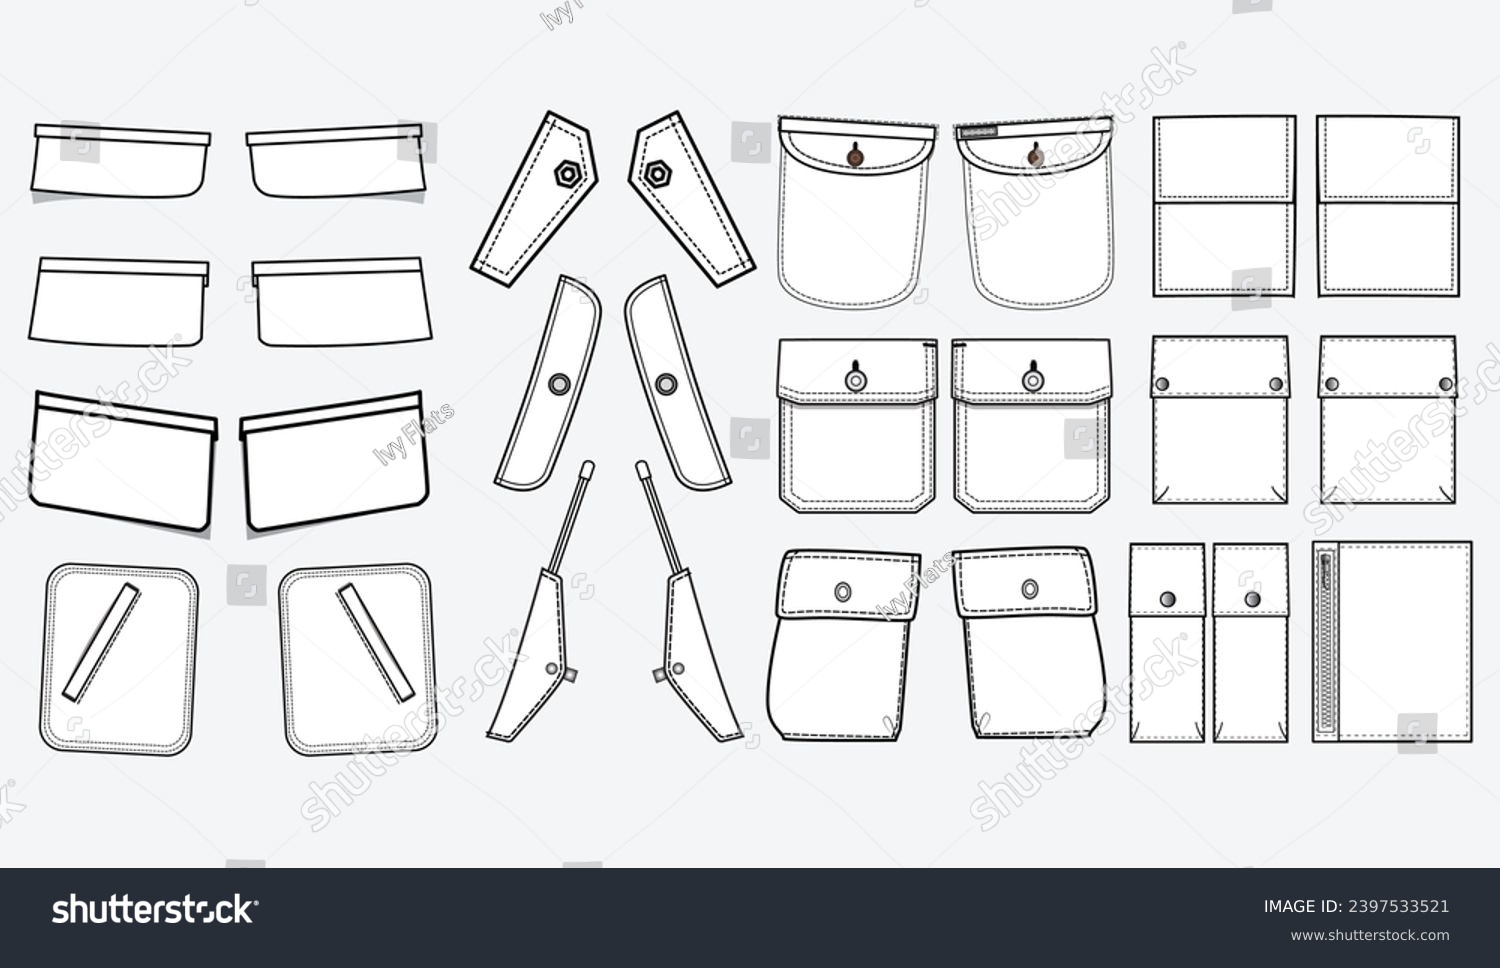 SVG of Patch pocket flat sketch vector illustration set, different types of Clothing Pockets for jeans pocket, denim, sleeve arm, cargo pants, dresses, bag, blazer, garments, Clothing and Accessories svg